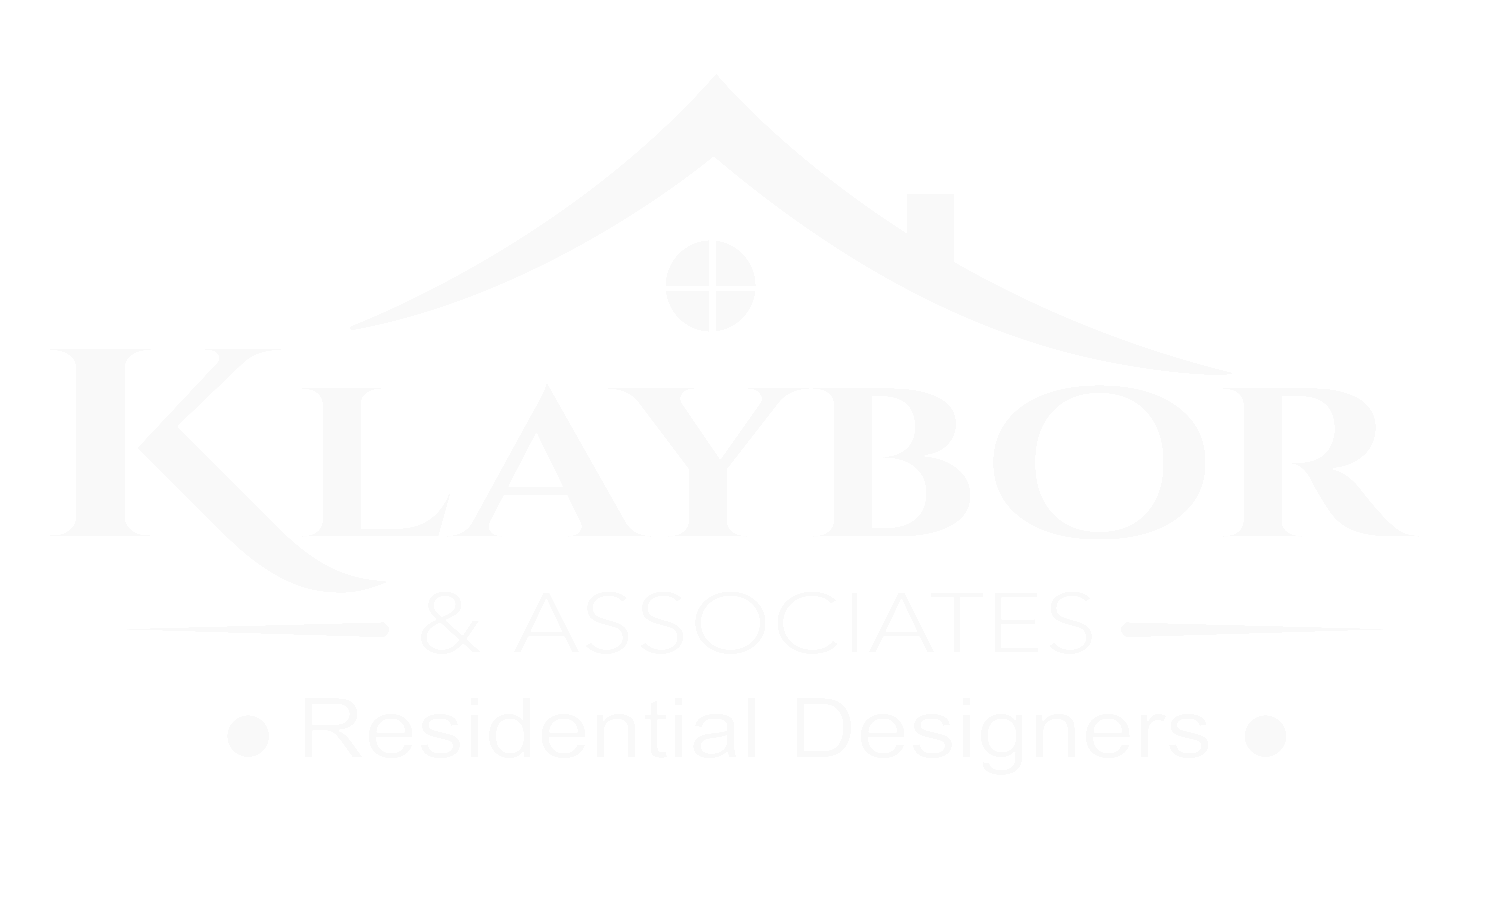  Klaybor & Associates